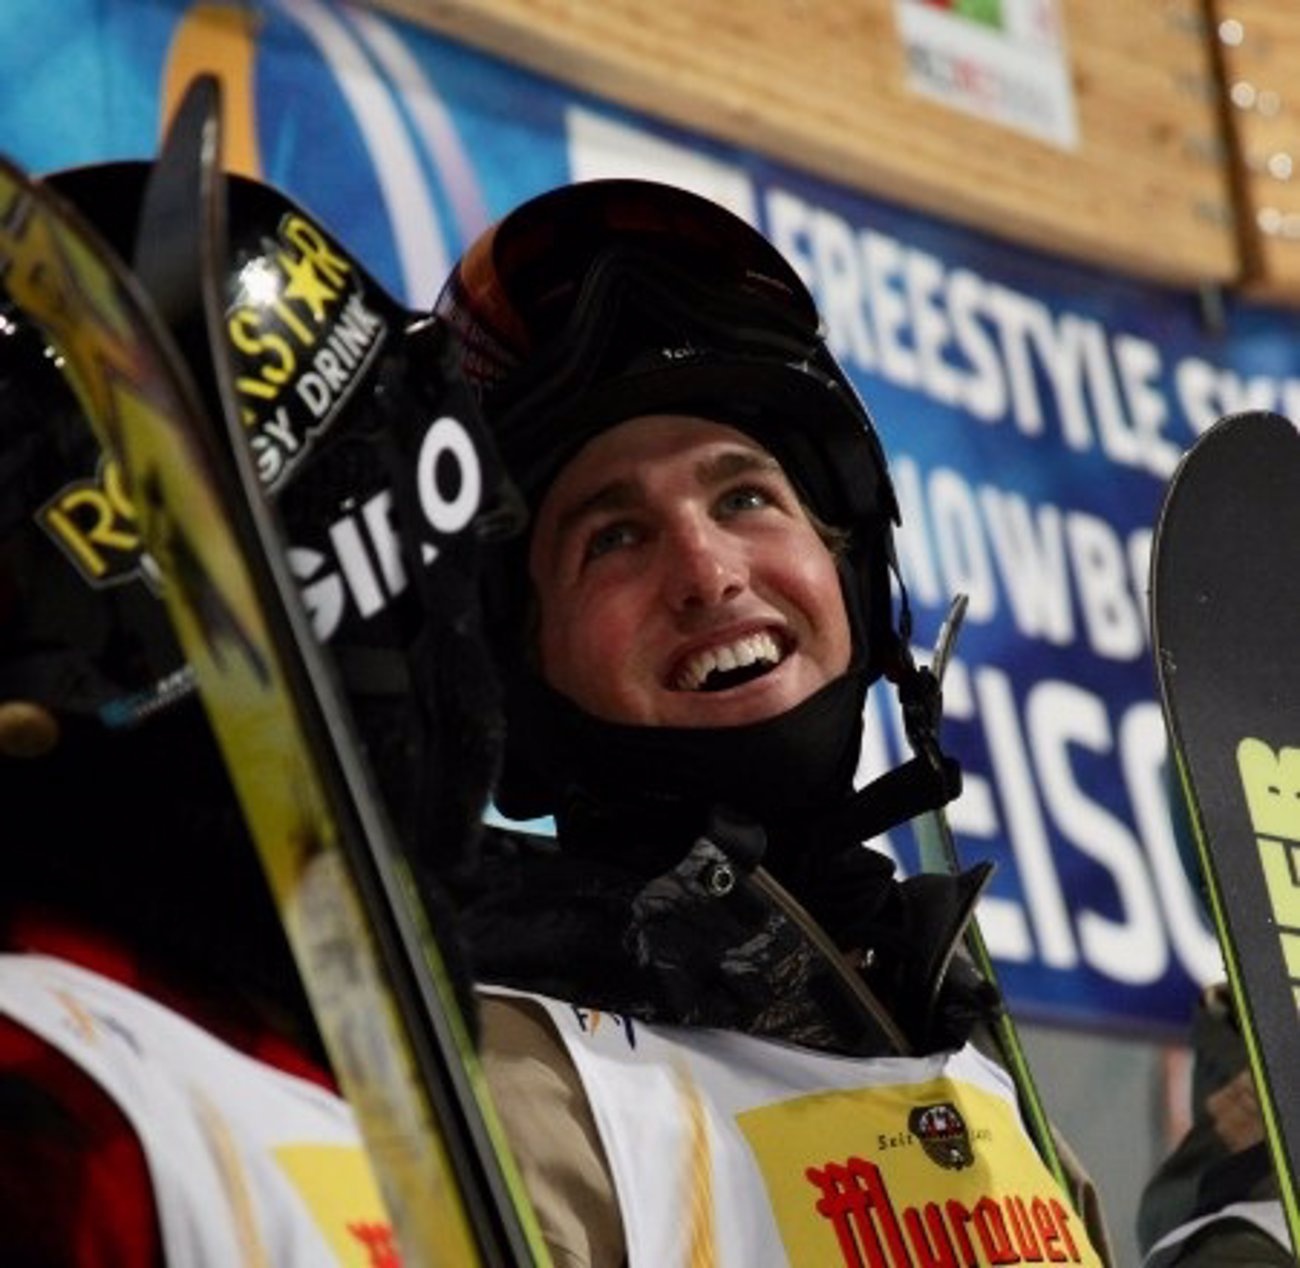 World ski champion Kyle Smaine killed in Japan